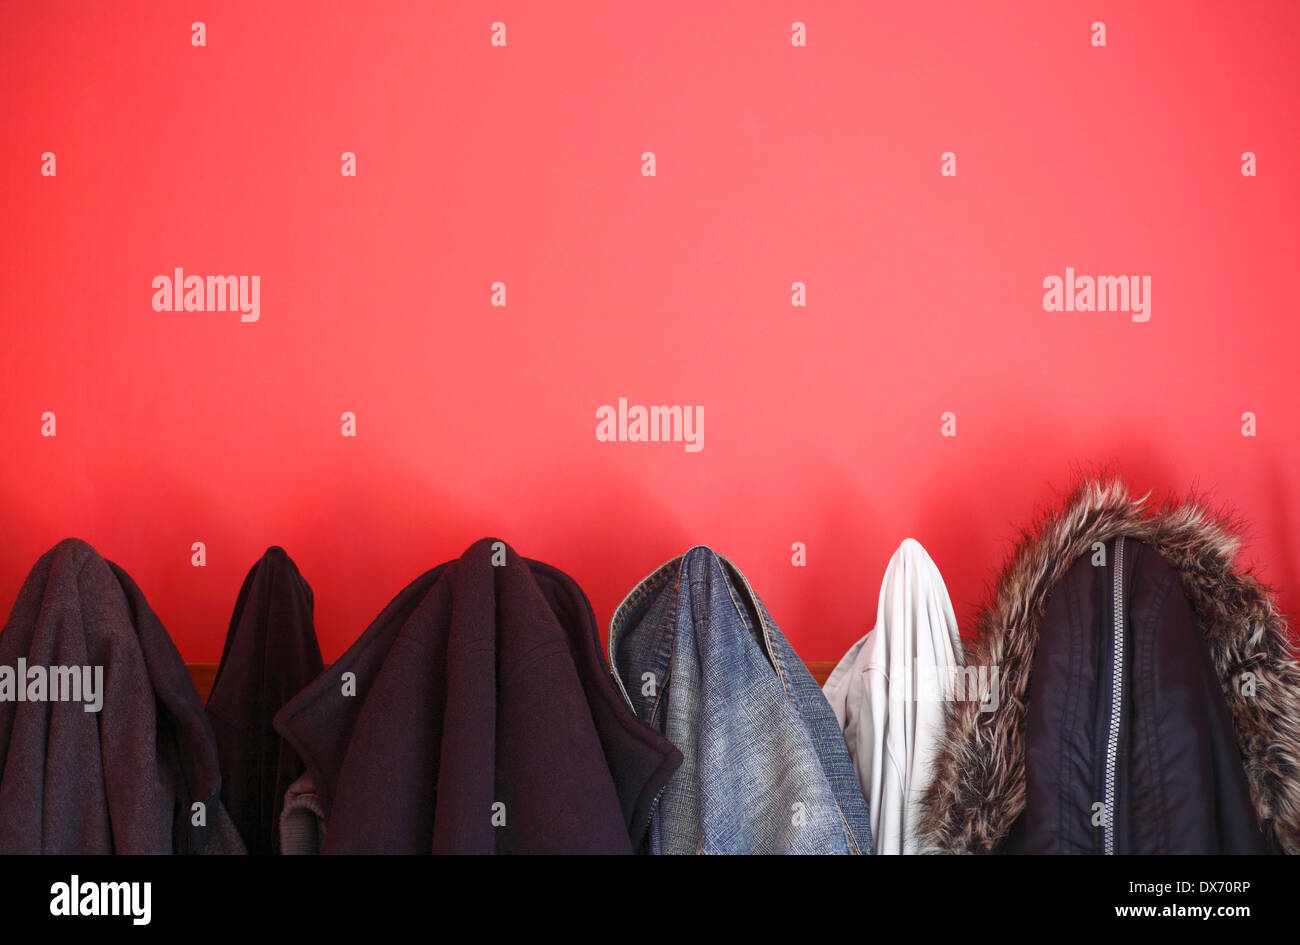 Mäntel und Jacken in rot lackierte Garderobe hängen Stockfotografie - Alamy